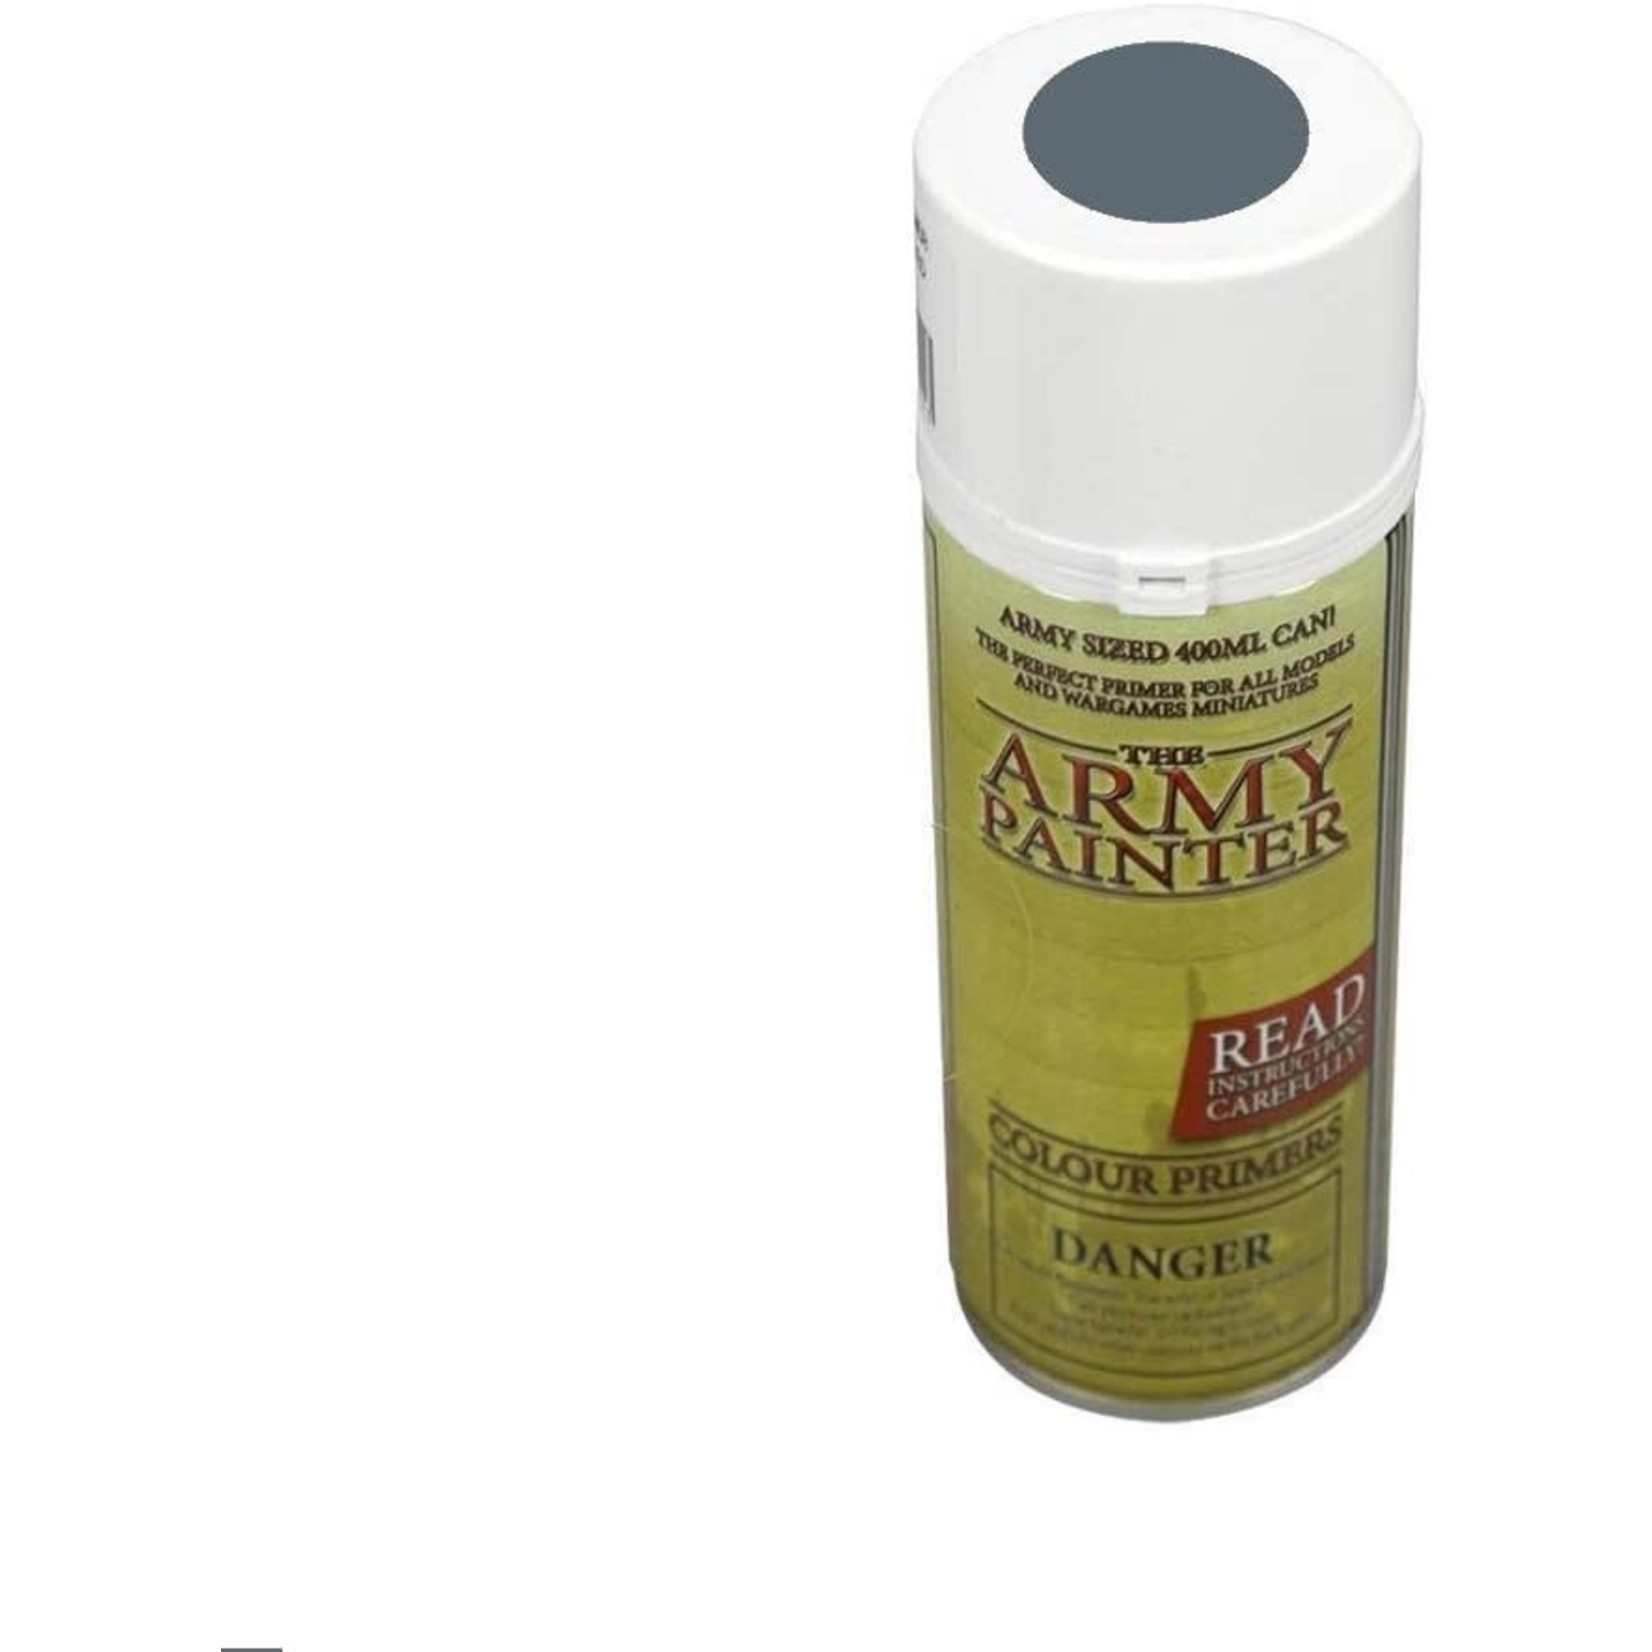 The Army Painter Miniature & Model Tools: Primer Uniform Grey